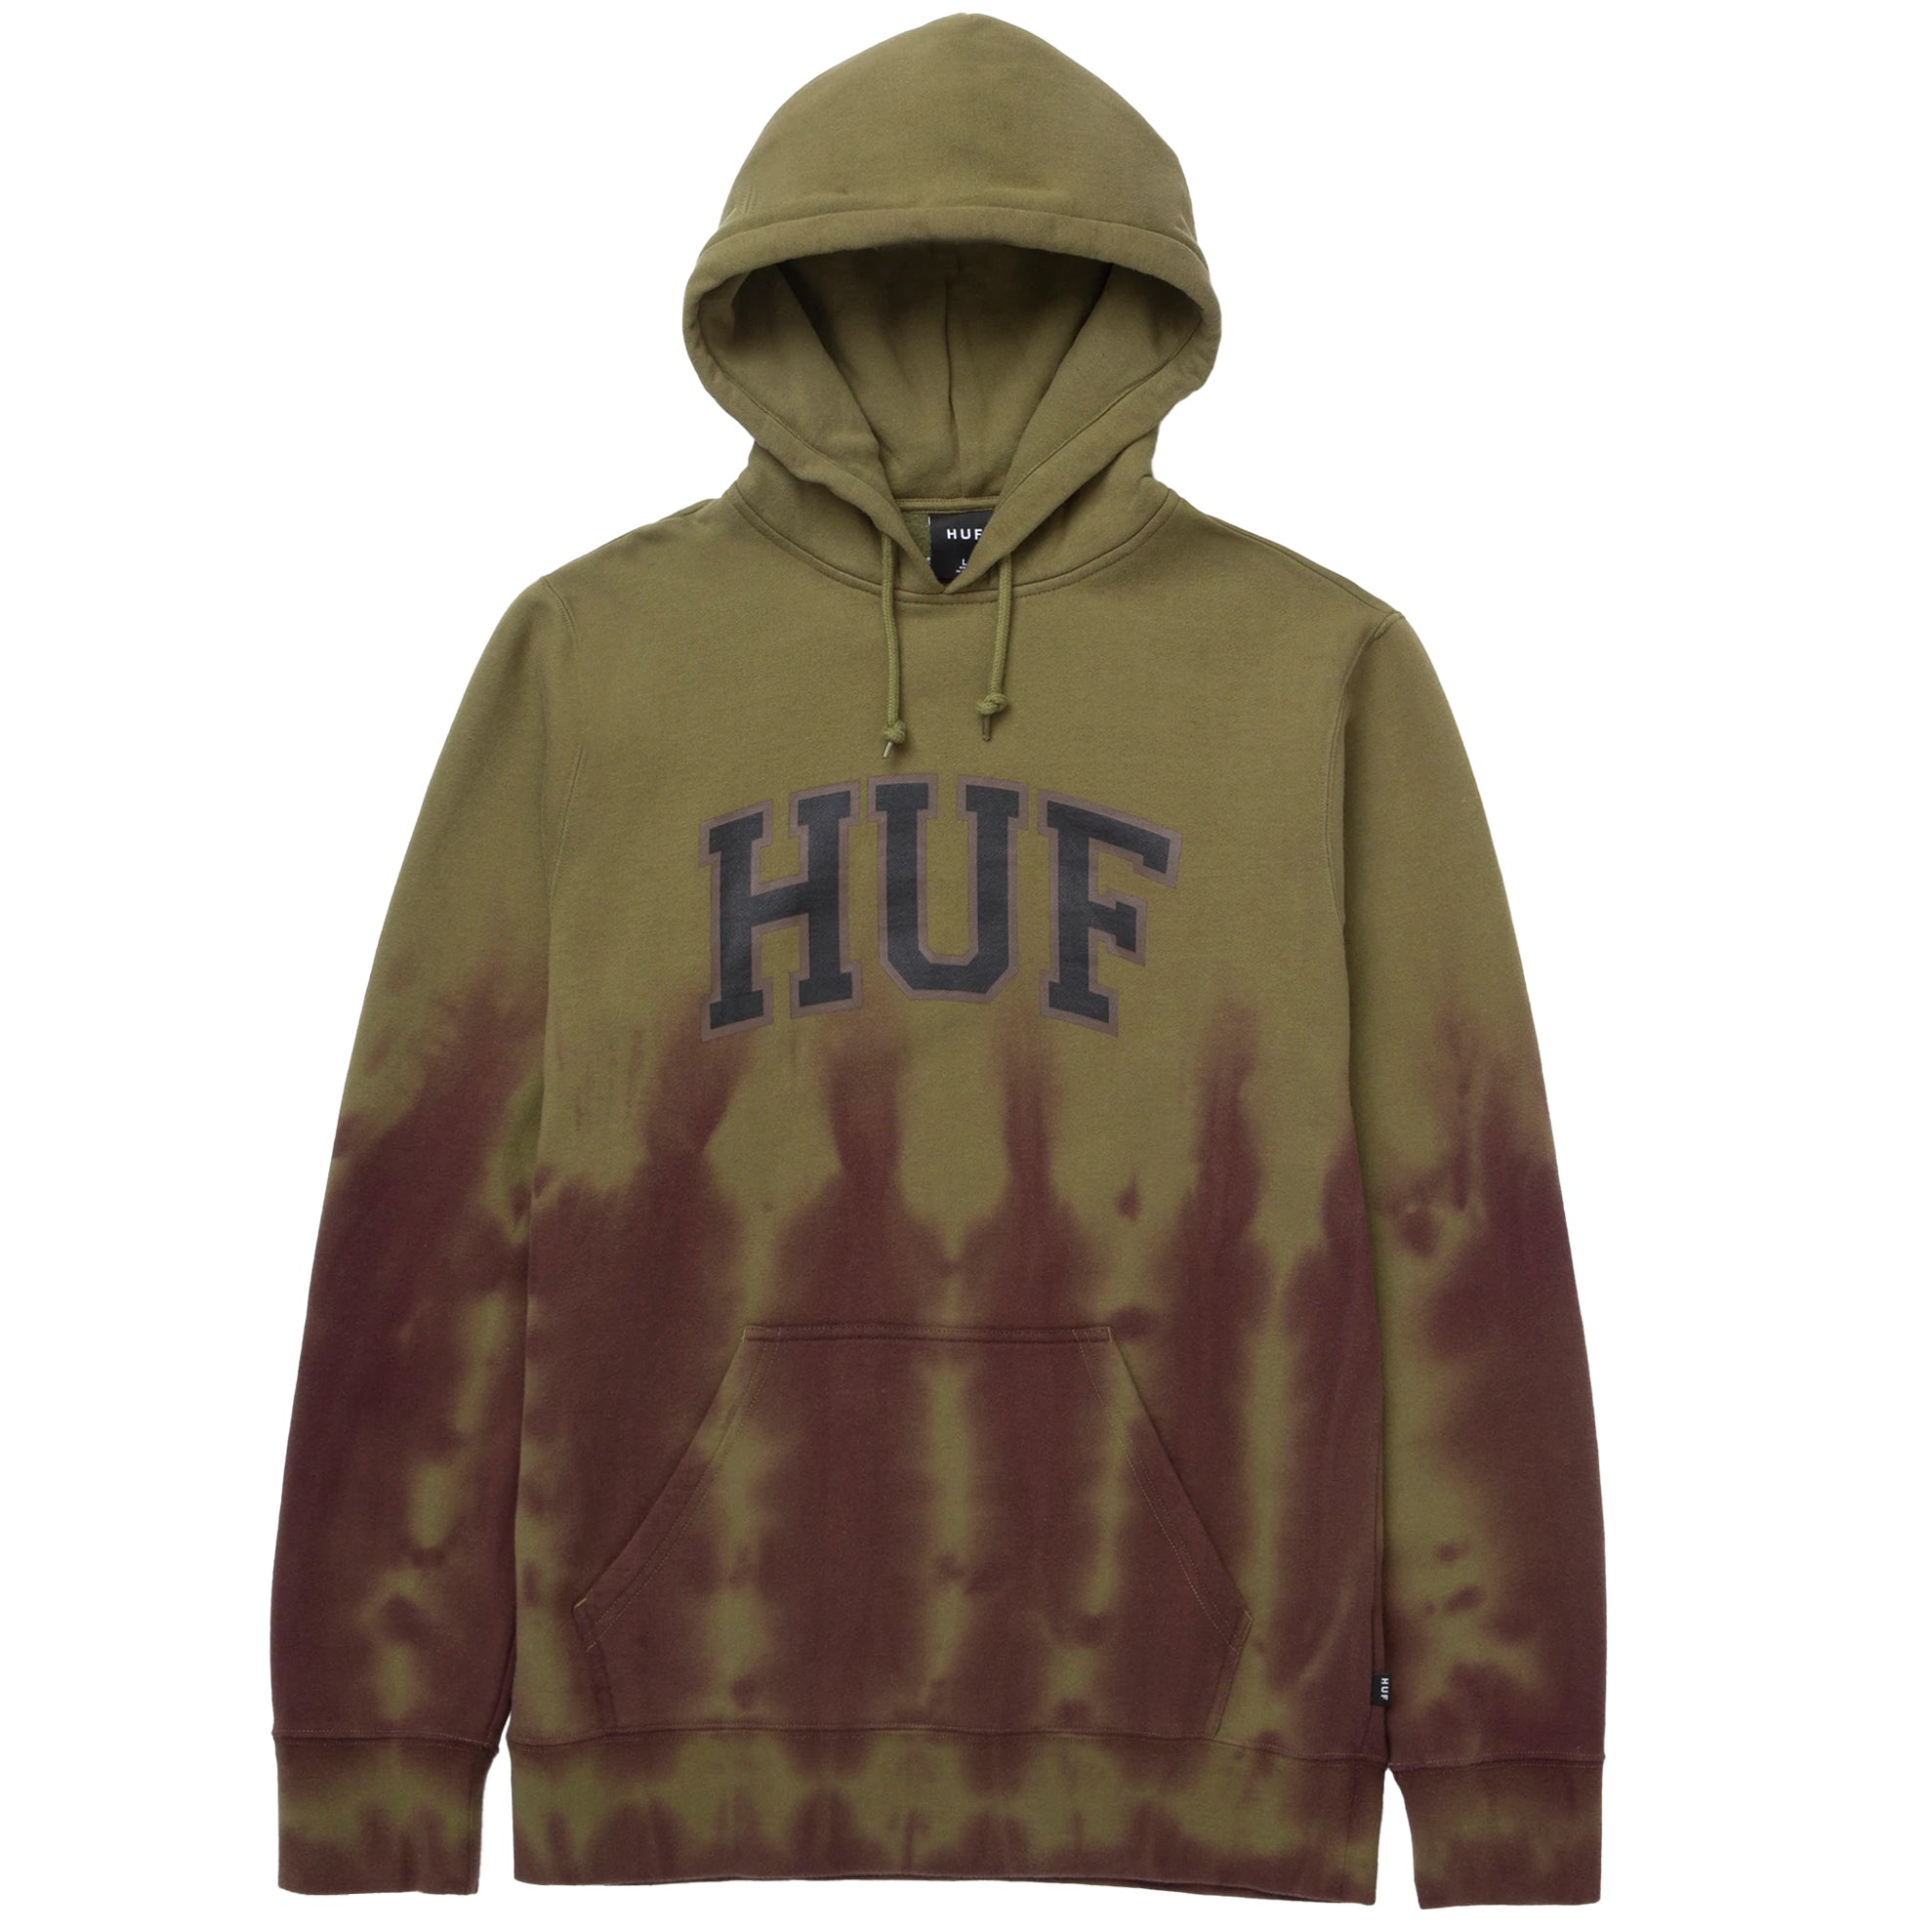 huf worldwide hartford tiedye po hoodie olive pf00426 olive